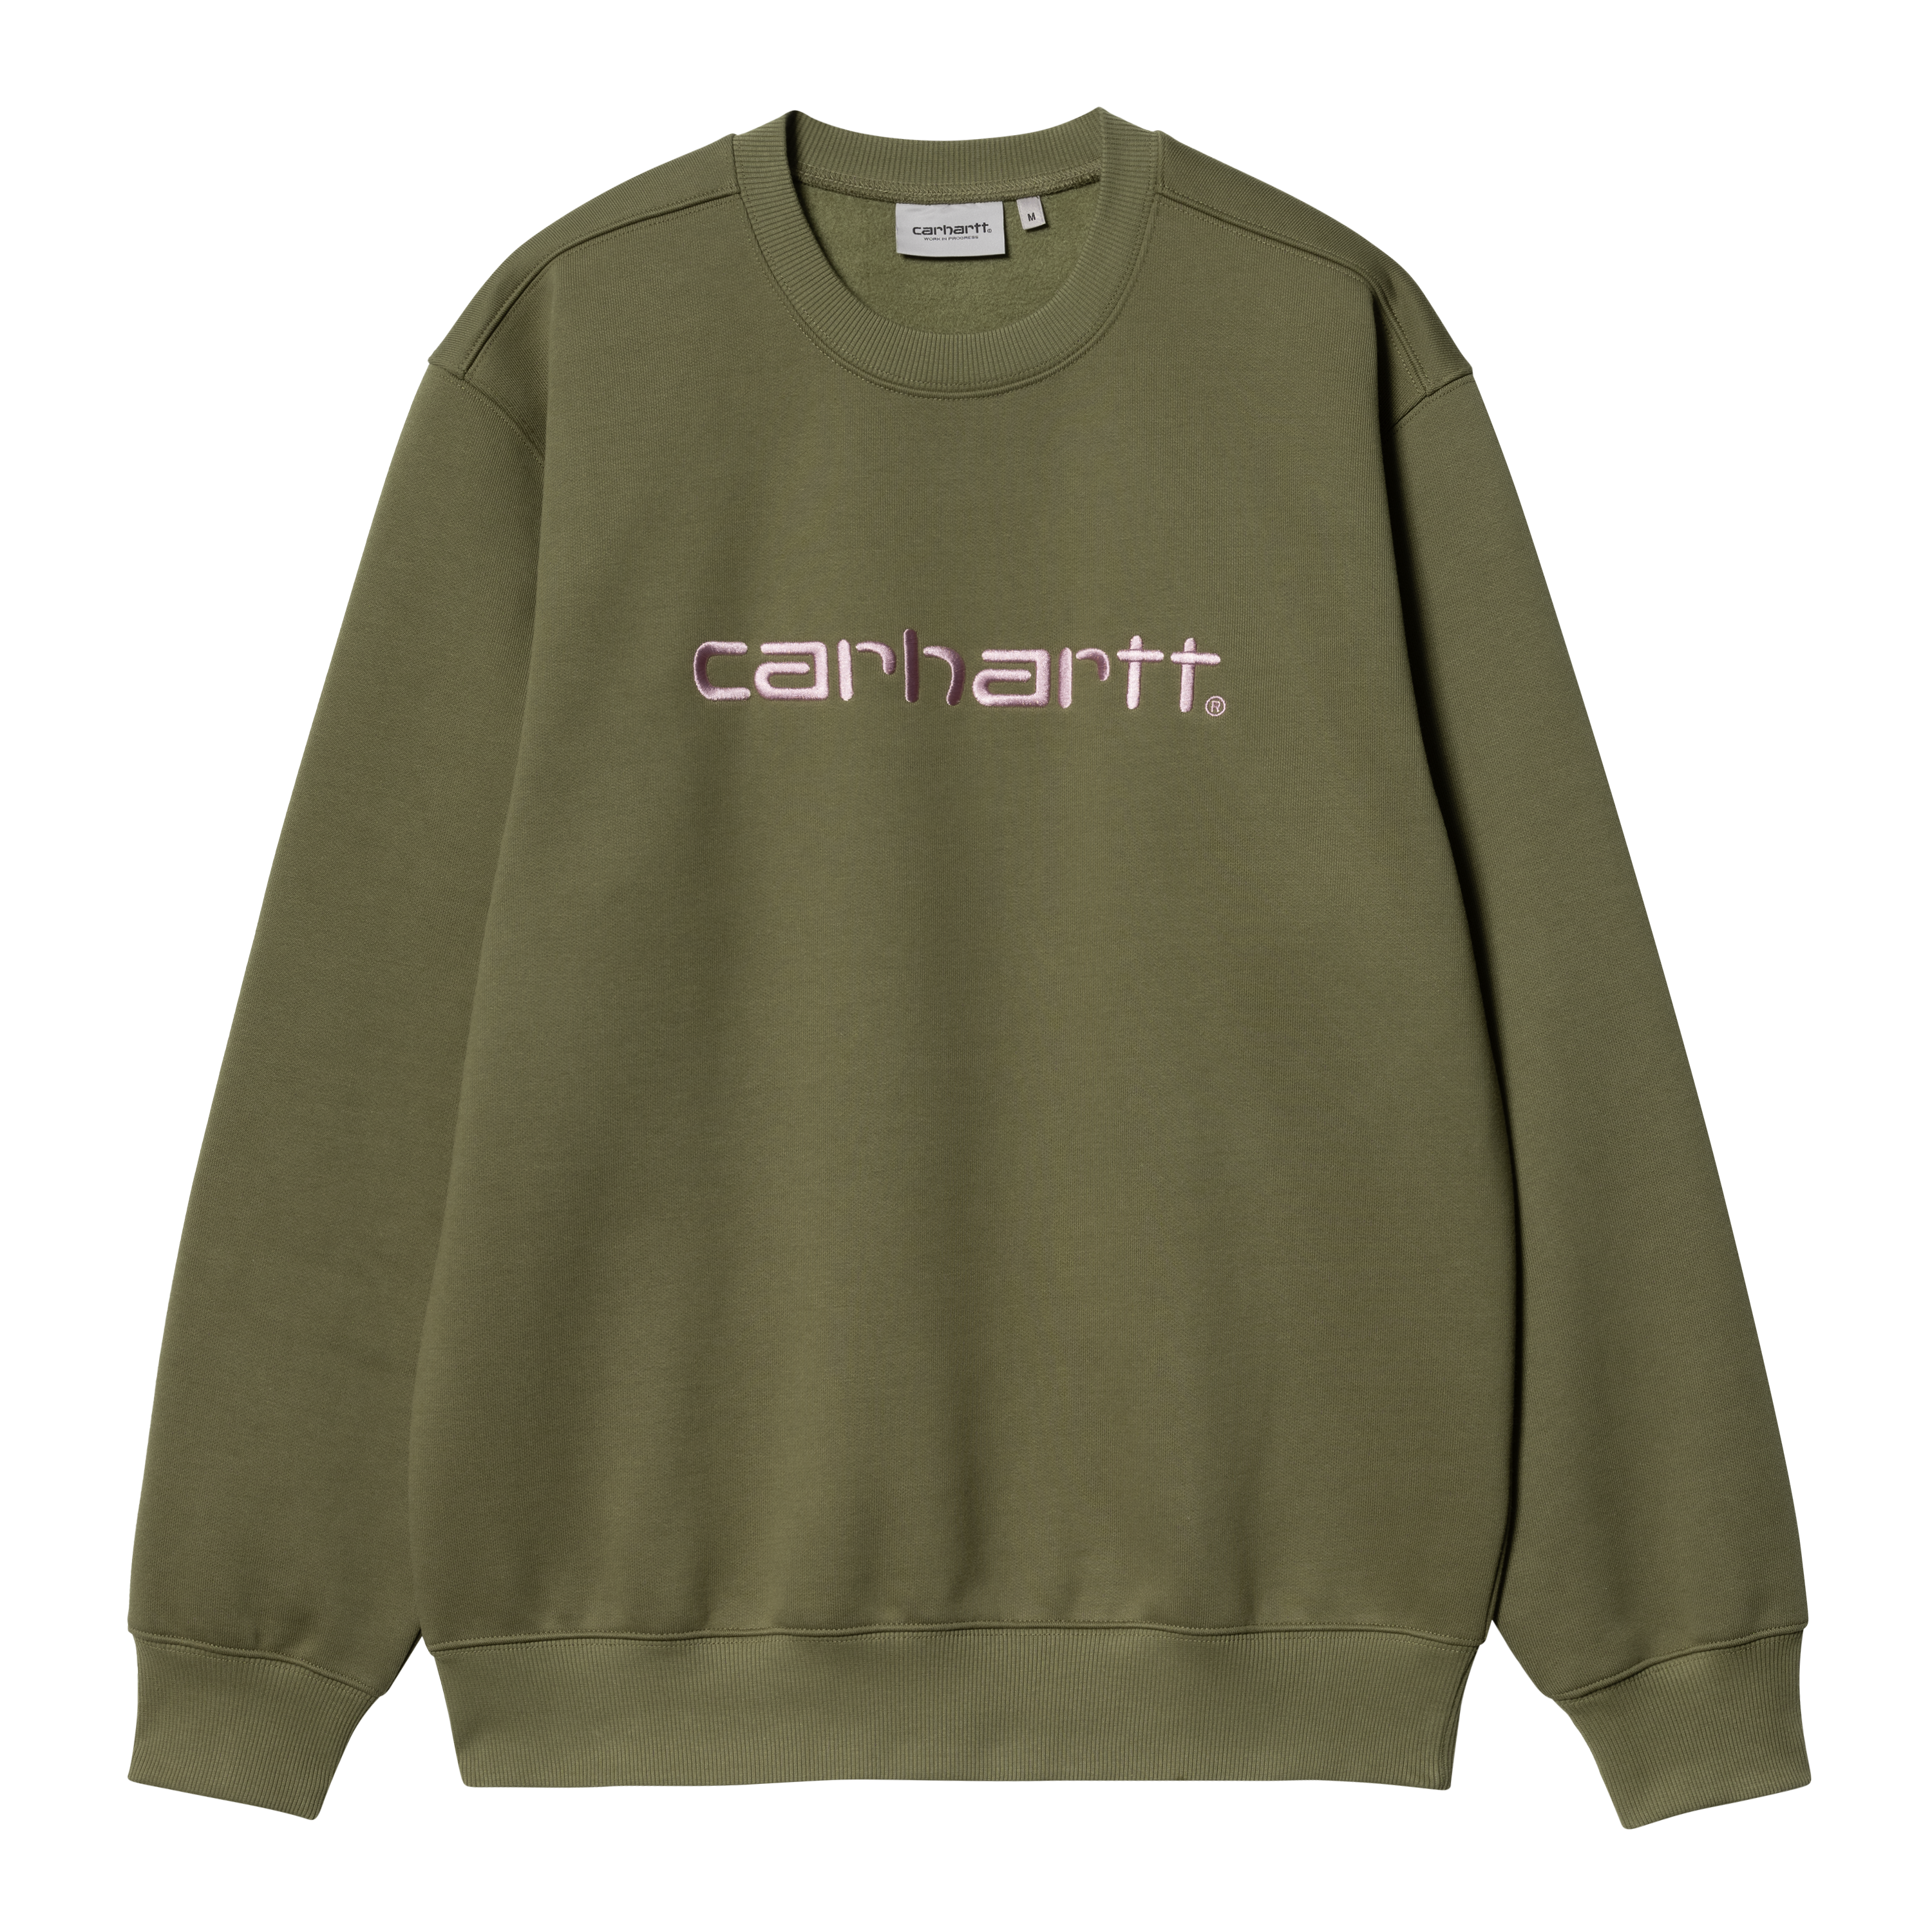 Carhartt WIP Carhartt Sweatshirt in Green